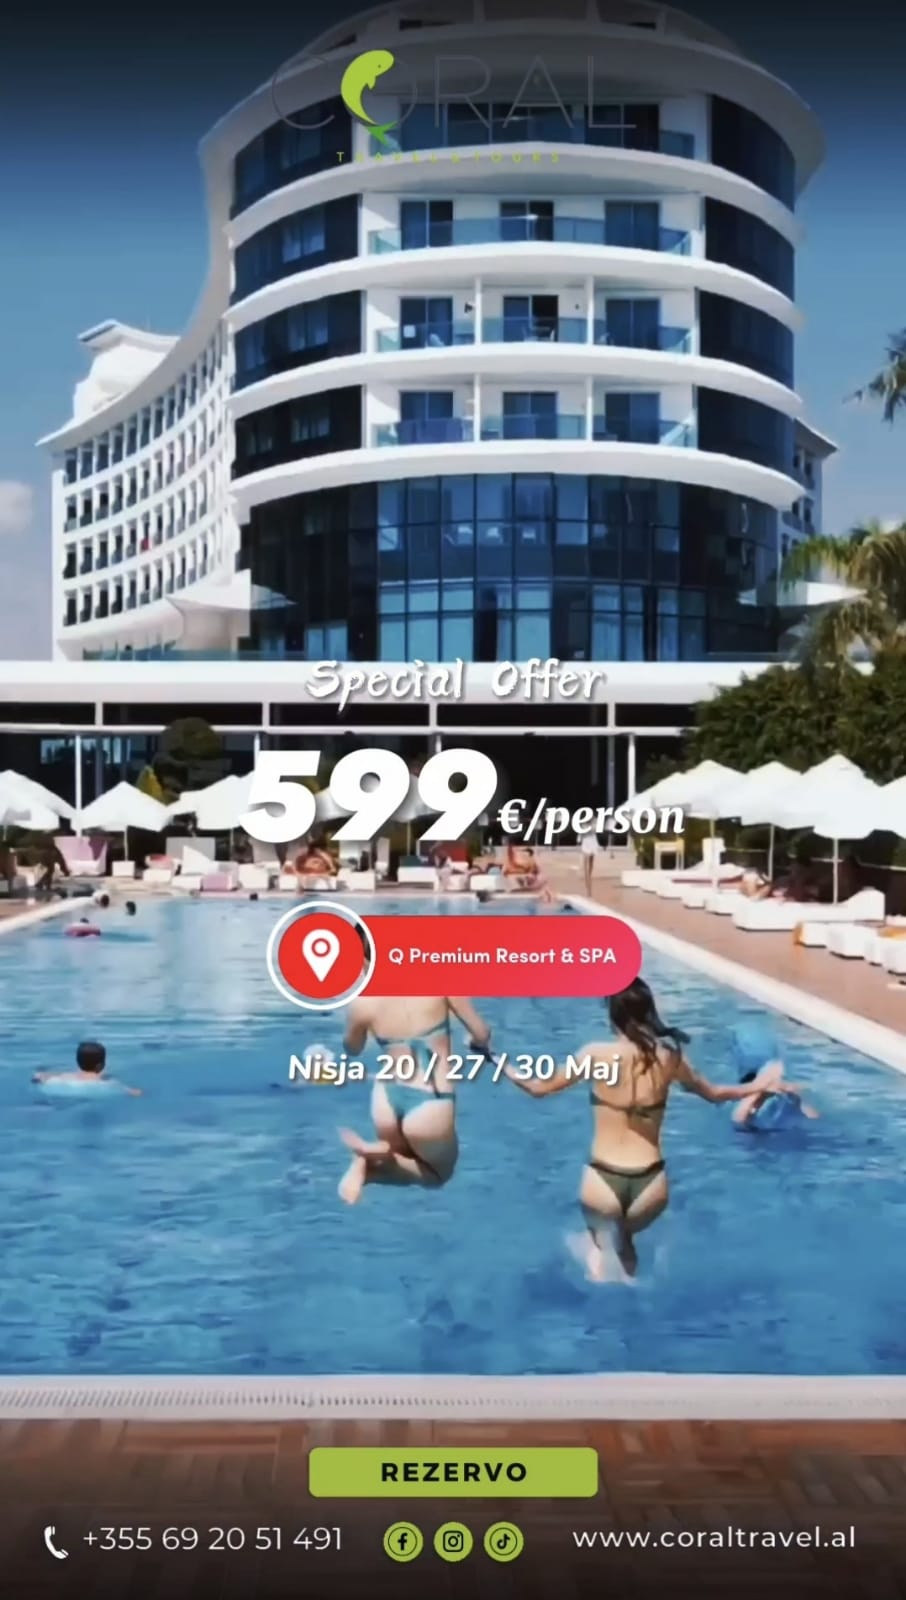 📍 Q Premium Resort & SPA, Antalya